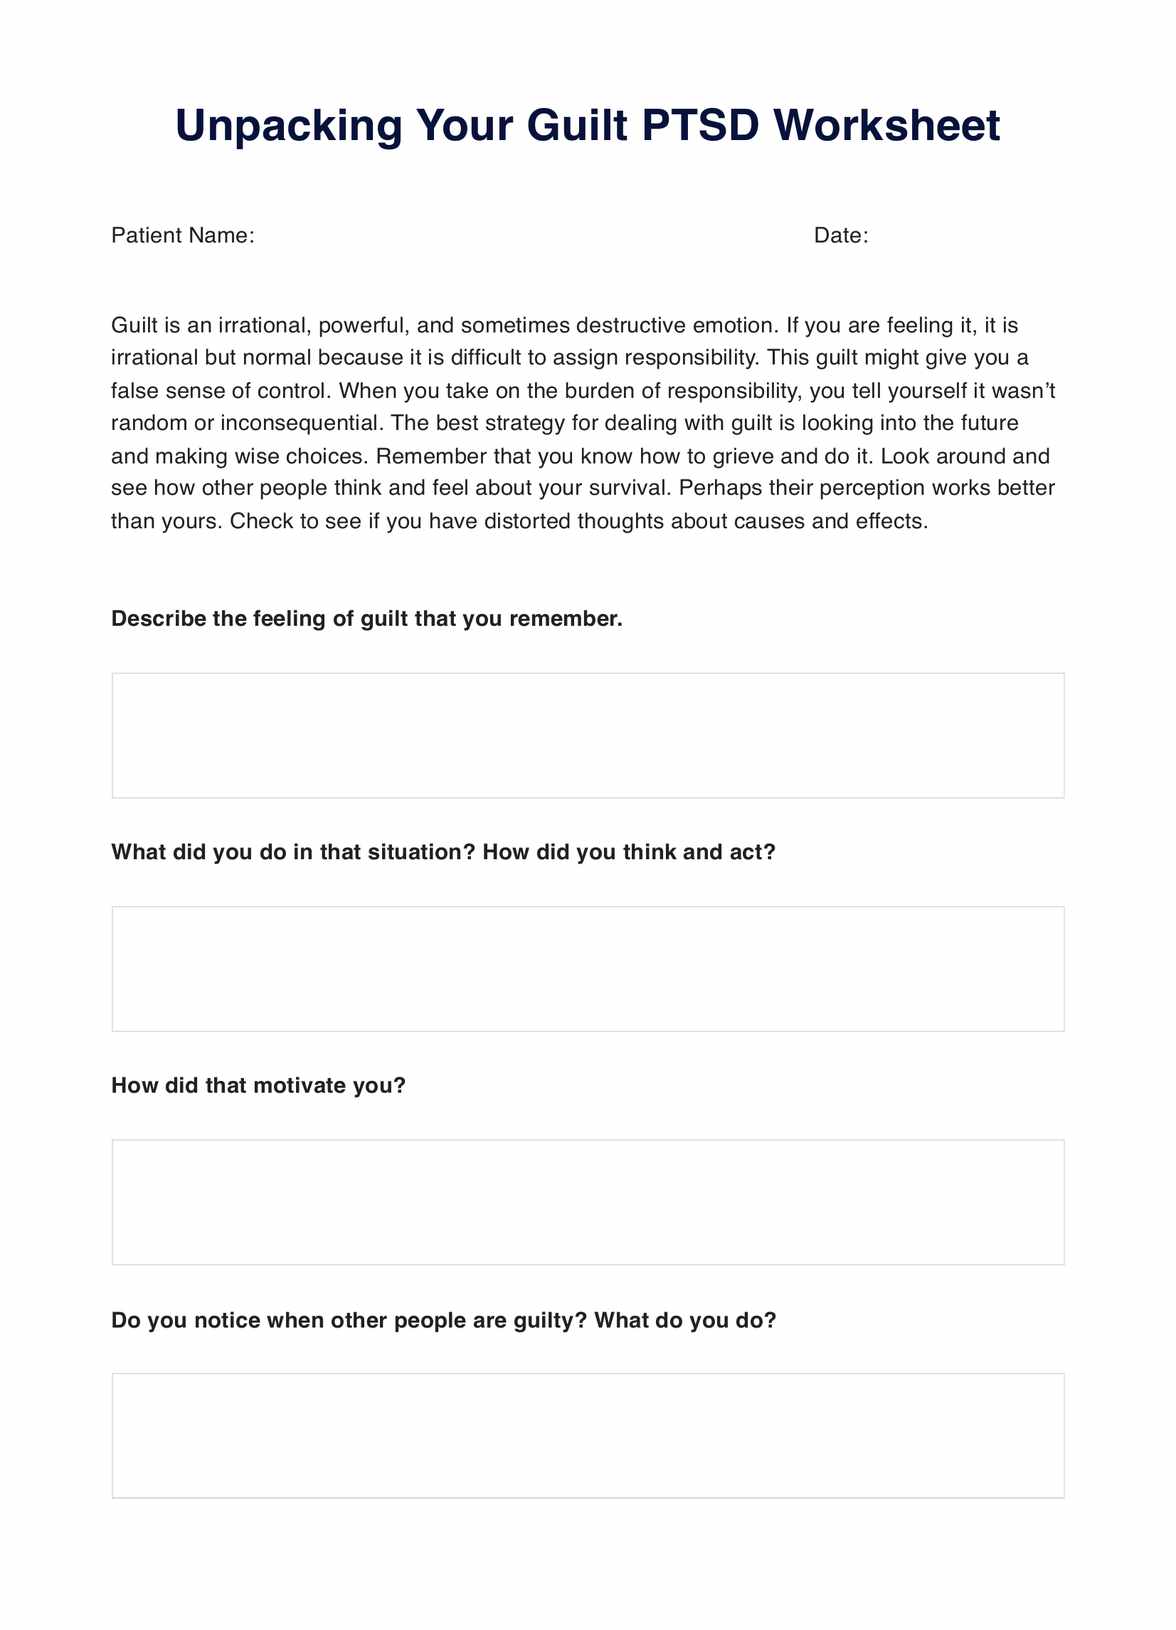 Unpacking Your Guilt PTSD Worksheet PDF Example